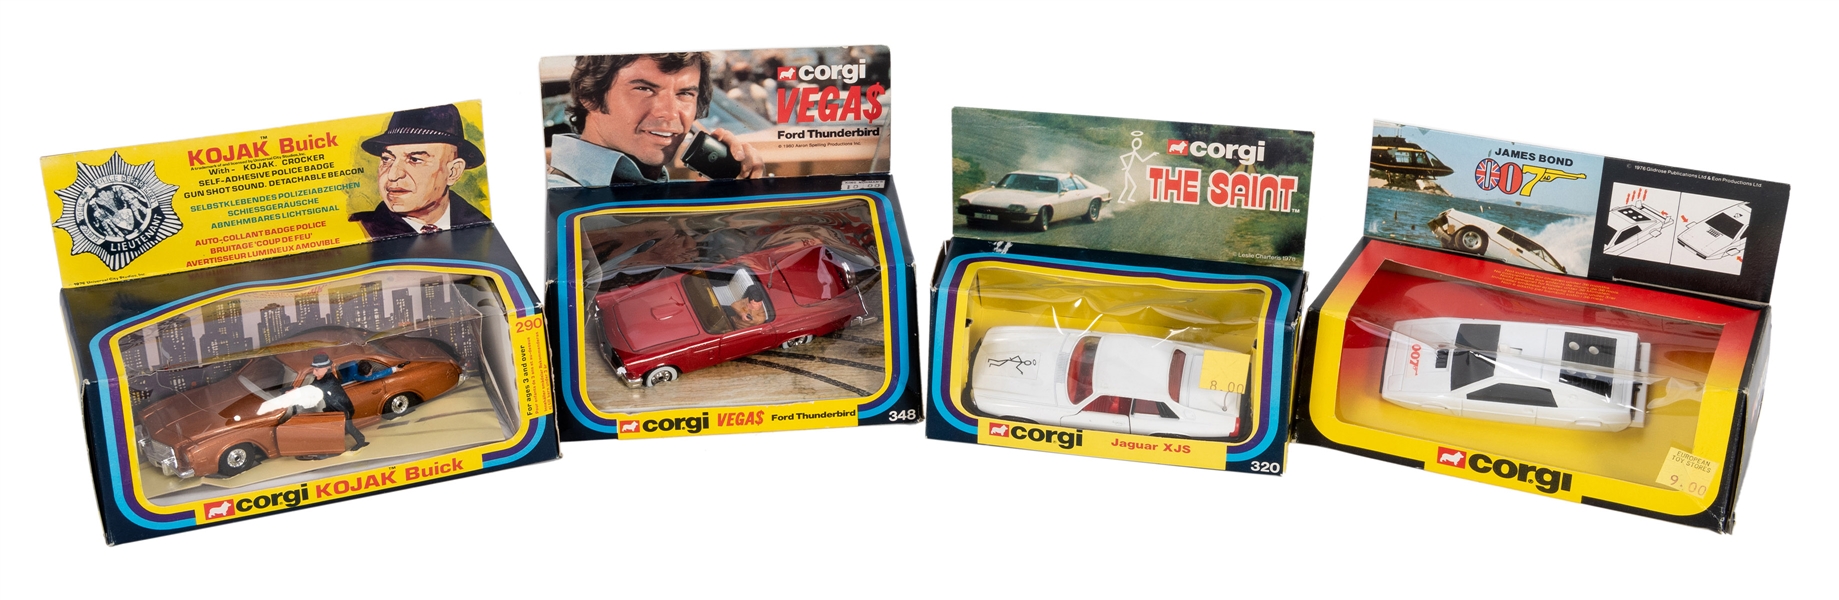 Lot of Four Corgi TV / Movie Character Cars. 